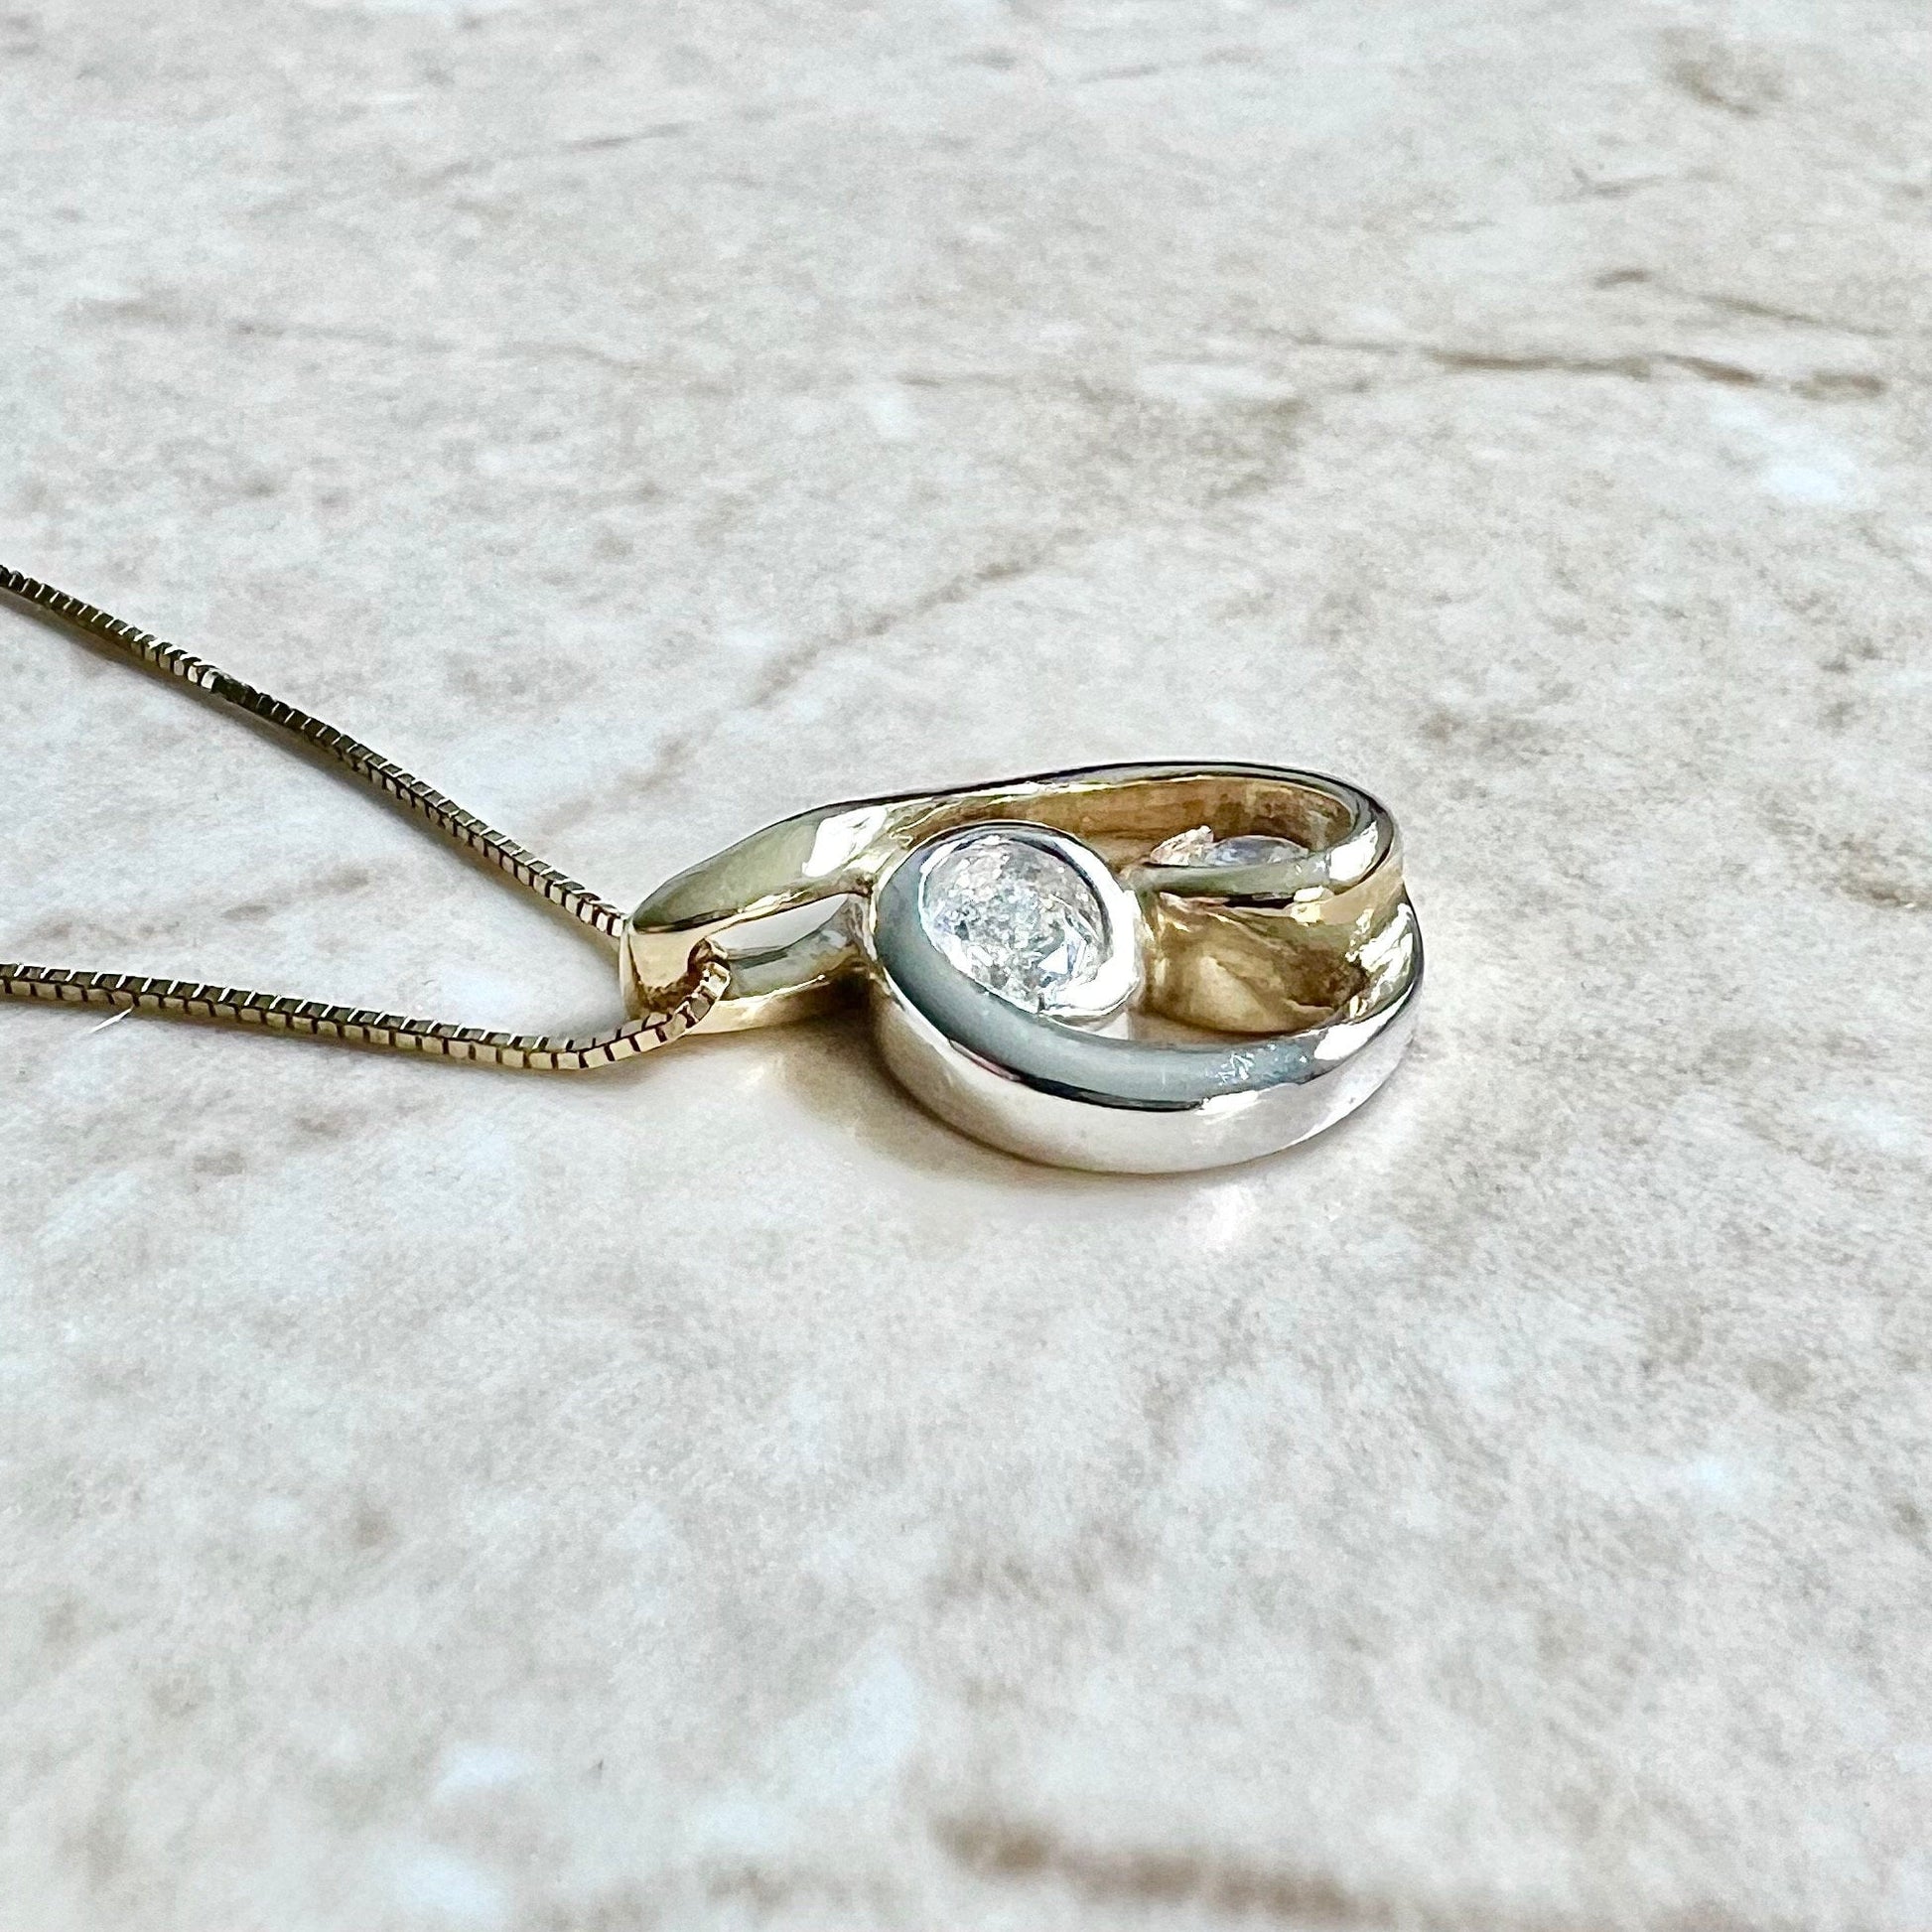 14K Two Tone Gold Diamond Yin Yang Necklace - Solid Gold Yin Yang Pendant Necklace - Yinyang Spiritual Necklace - 2 Stone Diamond Necklace